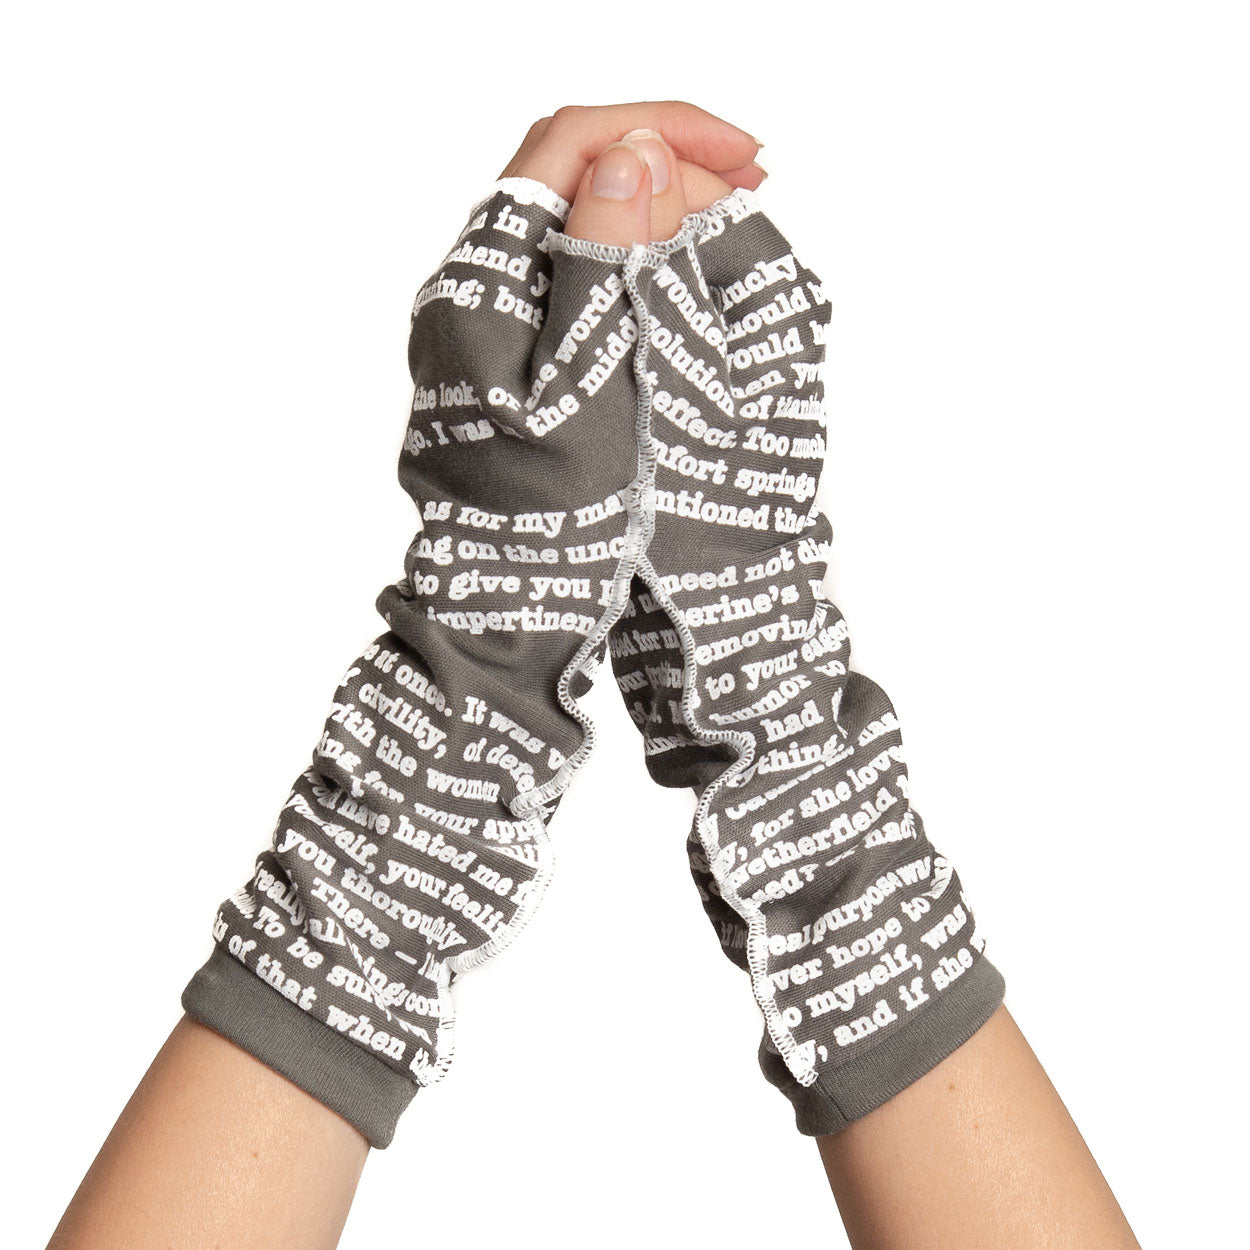 Sense and Sensibility Writing Gloves : Handmade Products 